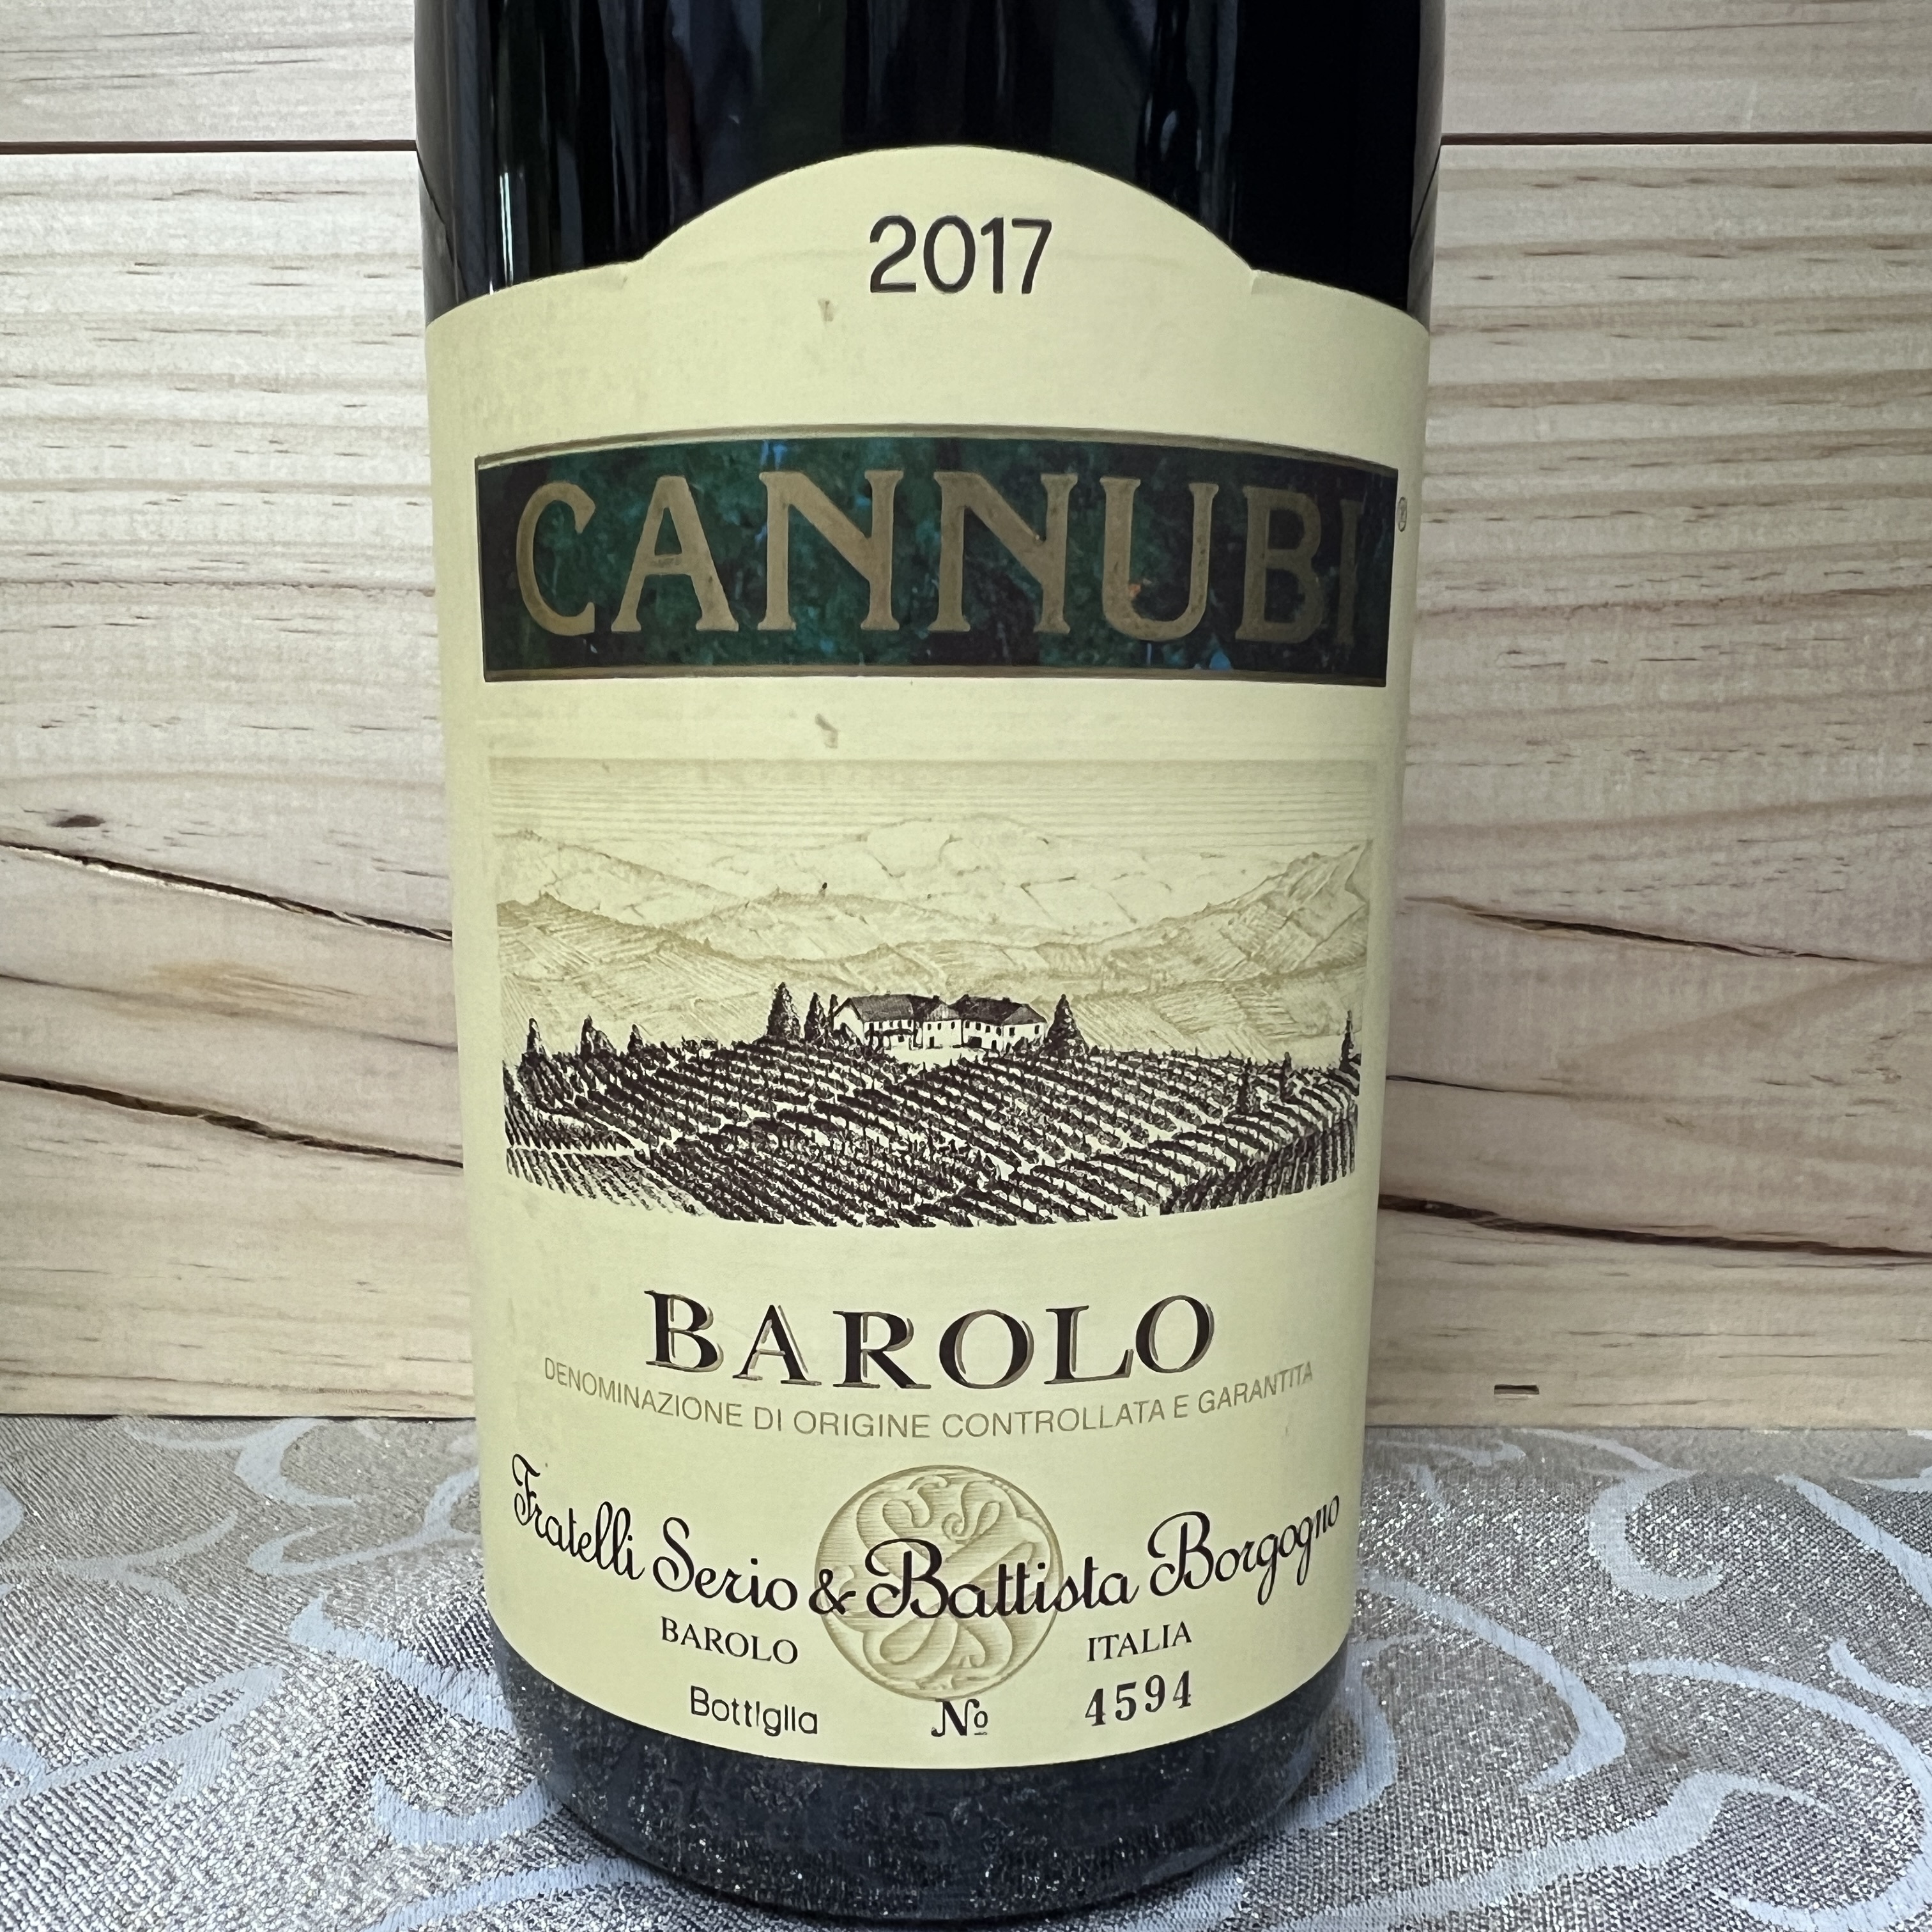 S & B Borgogno Barolo Cannubi Cru 2017